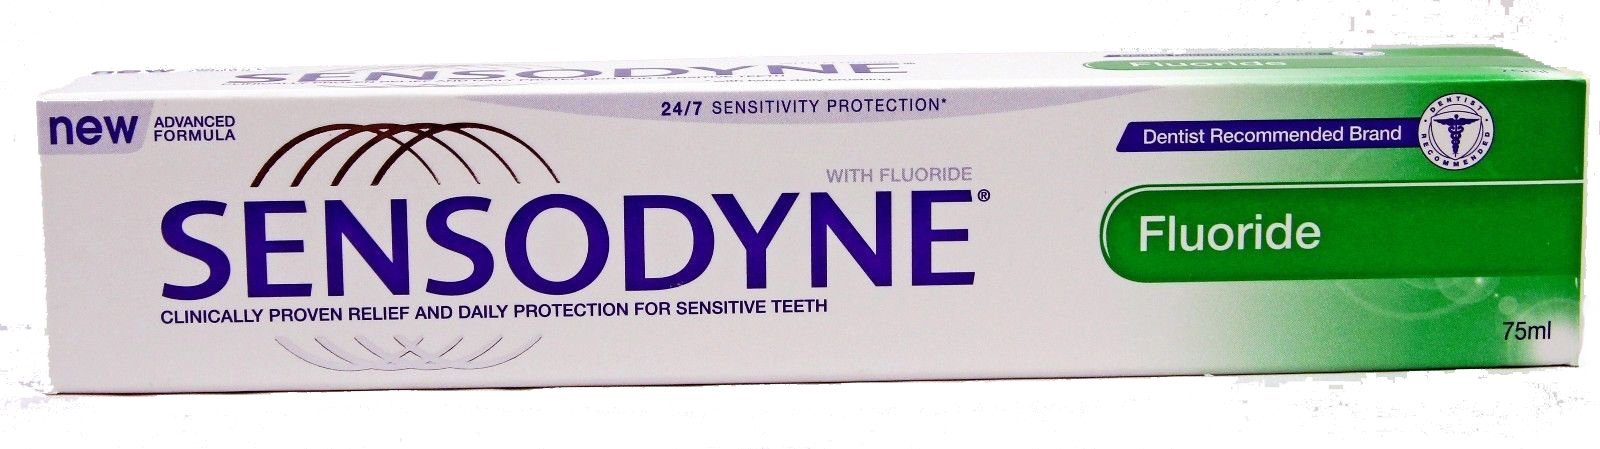 Sensodyne Fluoride Toothpaste Tube 75 Ml for Daily Protection - $29.37